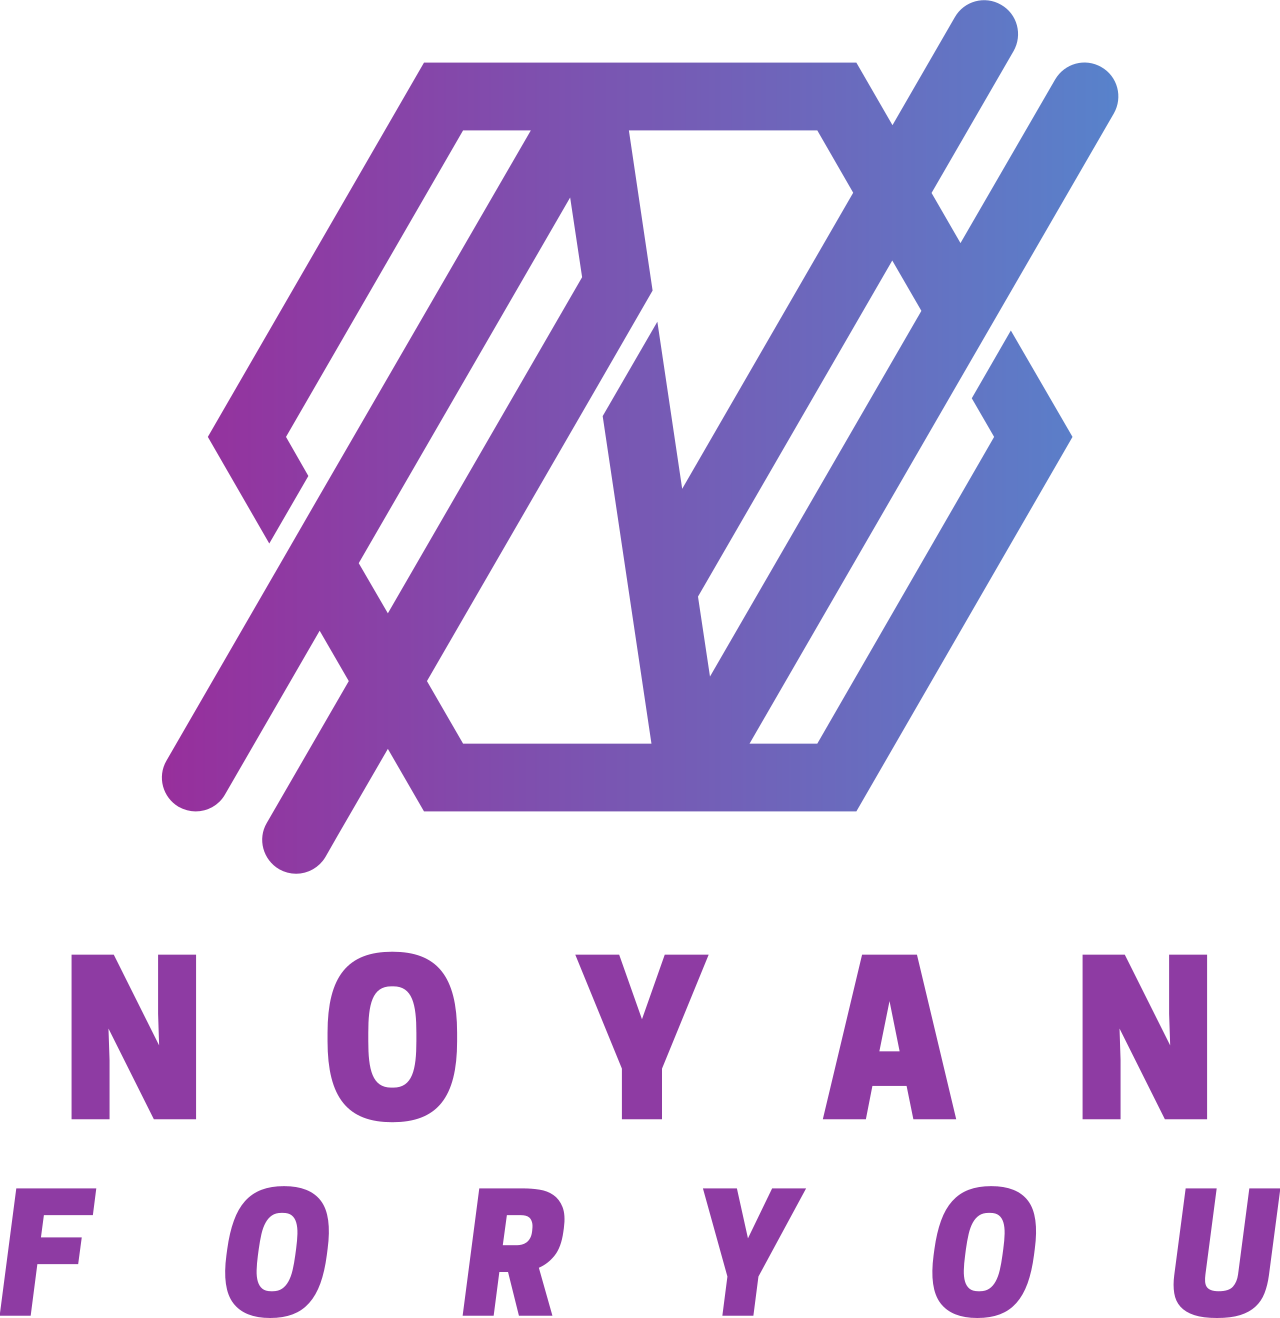 N O Y A N's web page